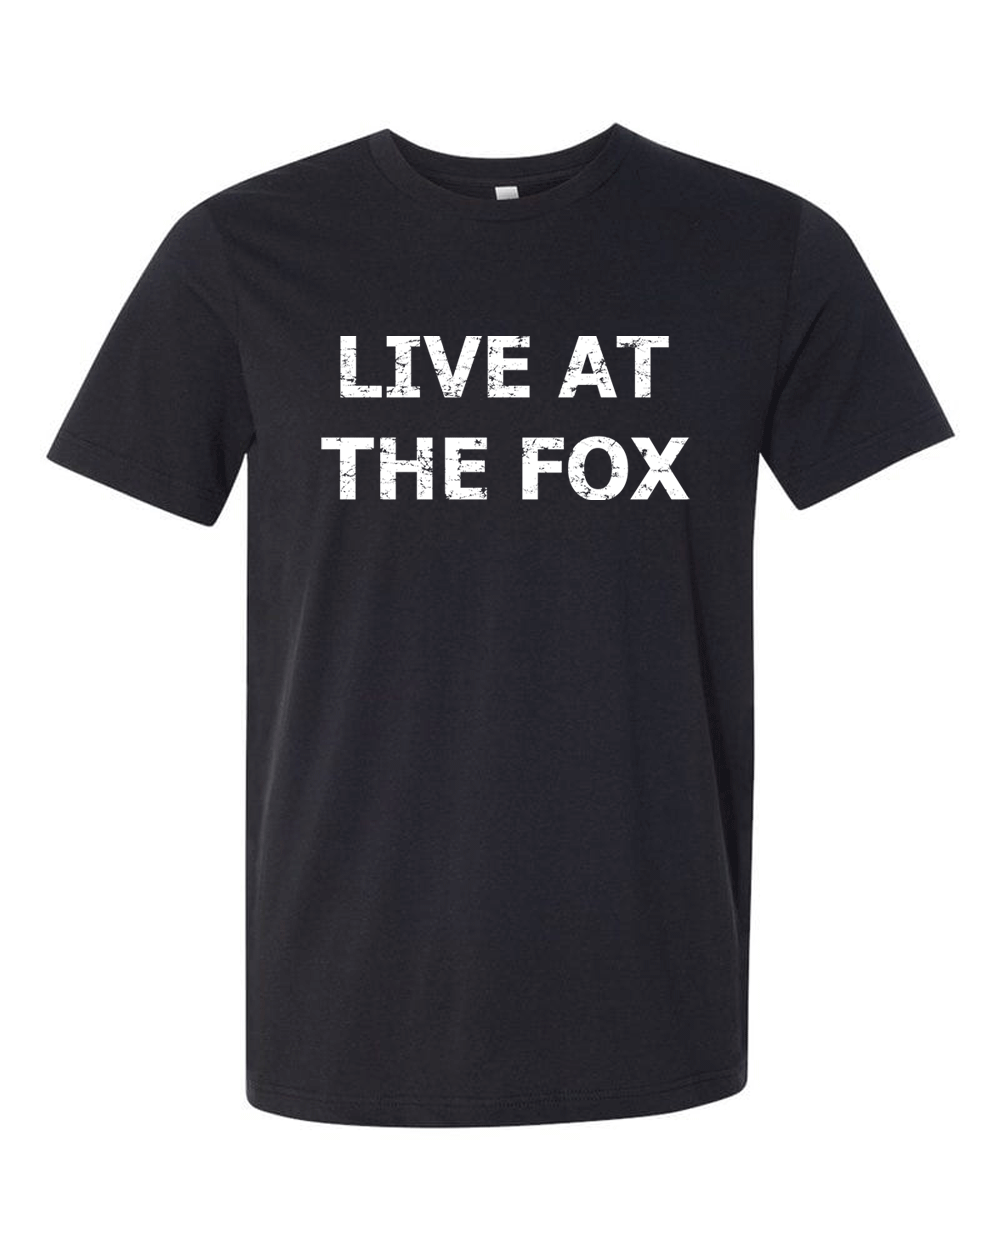 LIVE AT THE FOX White Distress Logo Bella Canvas T-shirt FREE SHIPPING